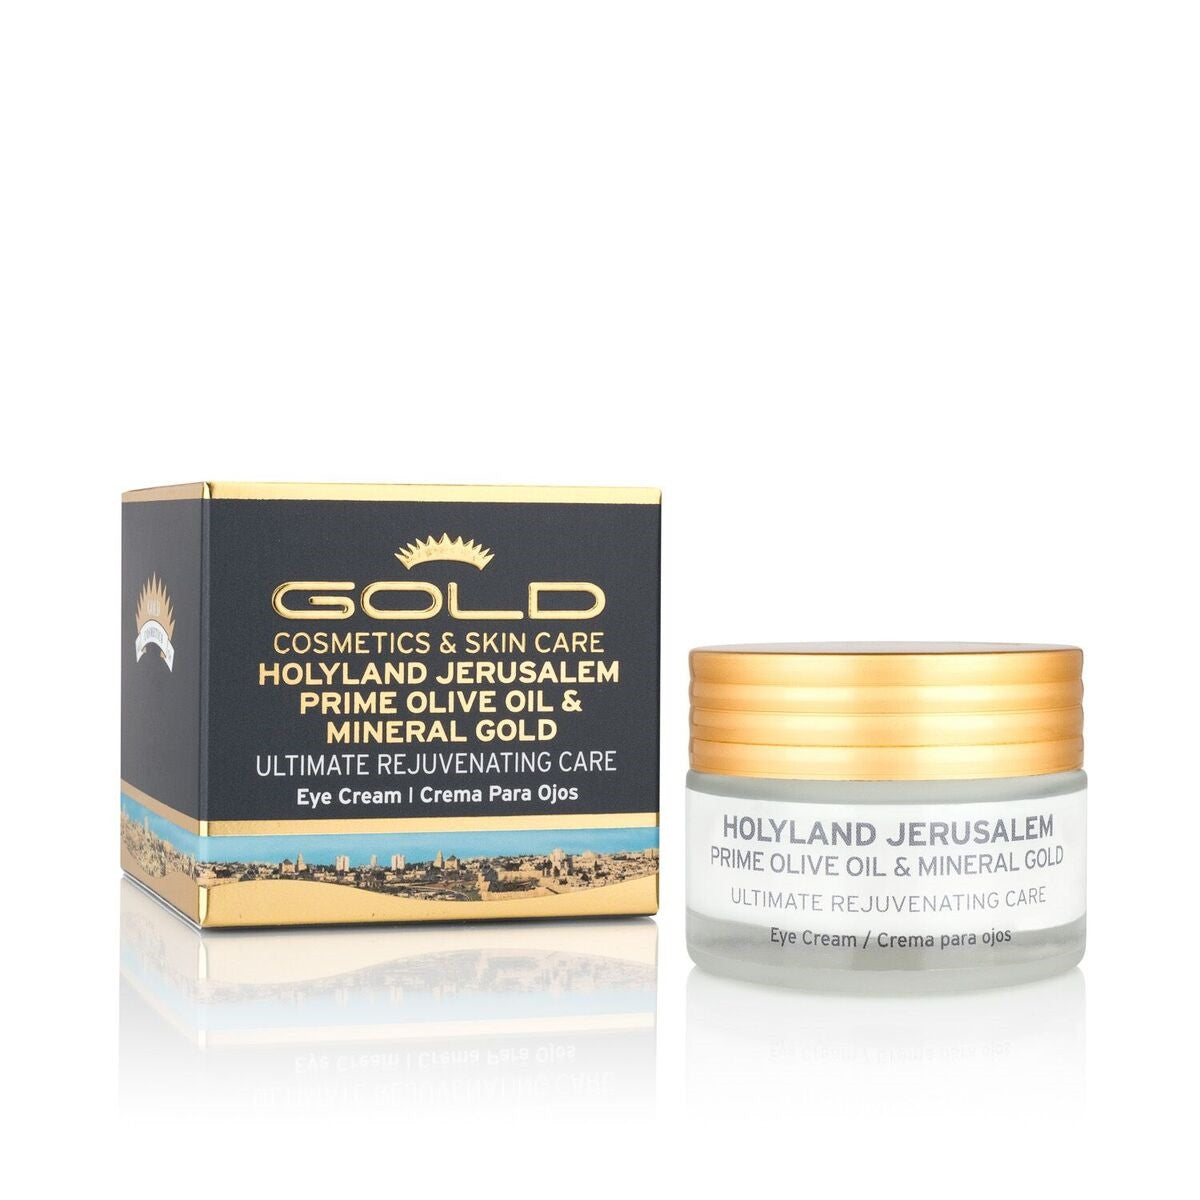 HOLYLAND JERUSALEM PRIME OLIVE OIL & MINERAL GOLD EYE CREAM - Gold Cosmetics & Skin Care